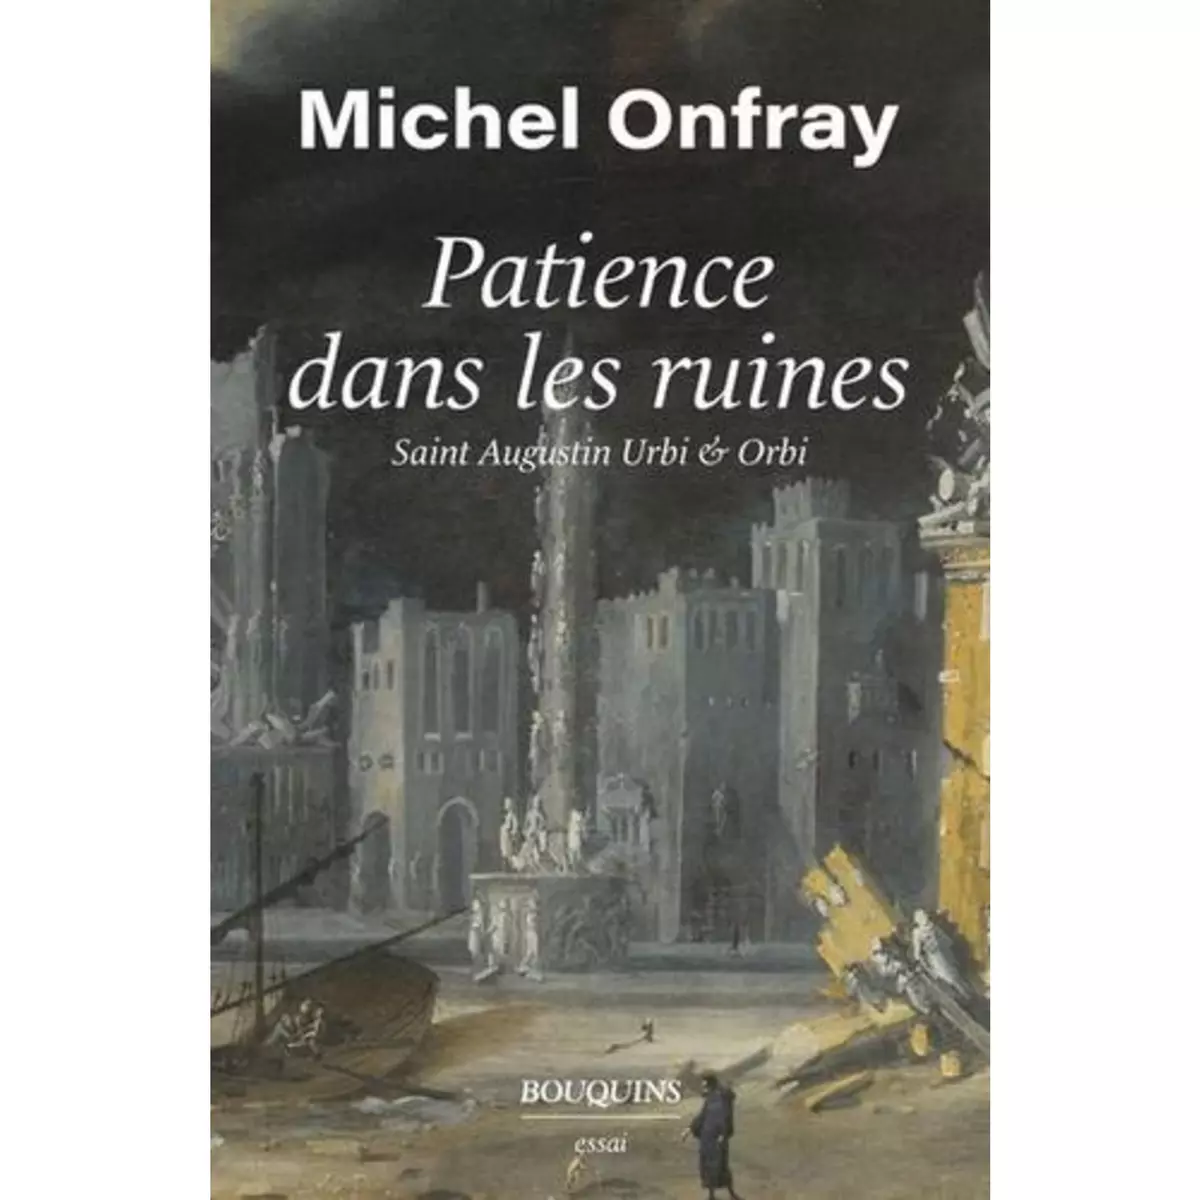  PATIENCE DANS LES RUINES. SAINT AUGUSTIN URBI & ORBI, Onfray Michel